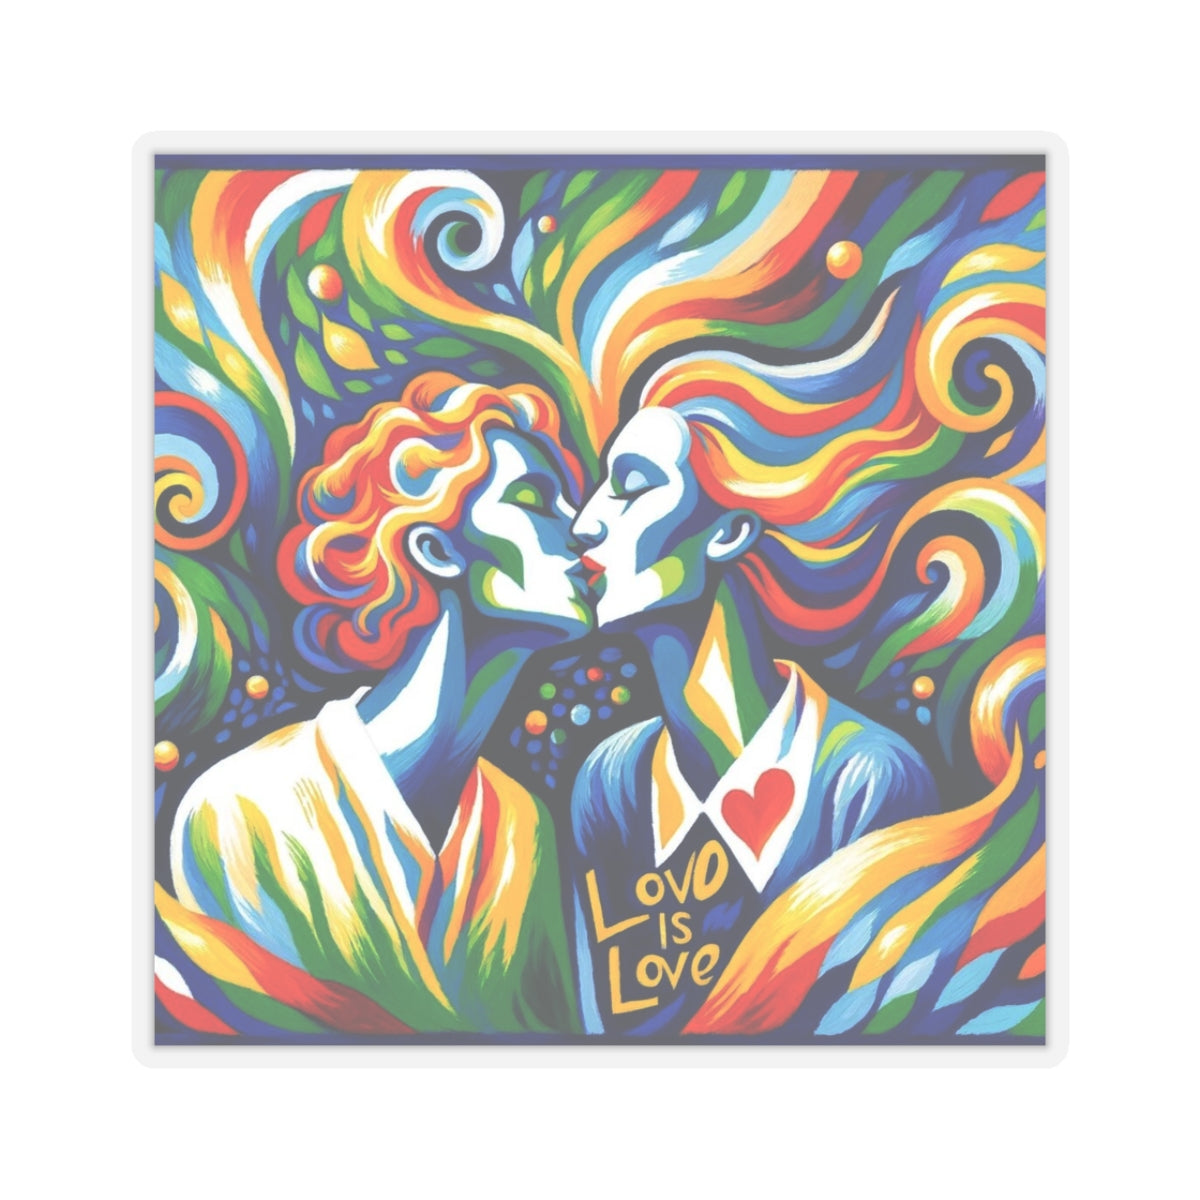 Bold Statement Stickers: Love is Love